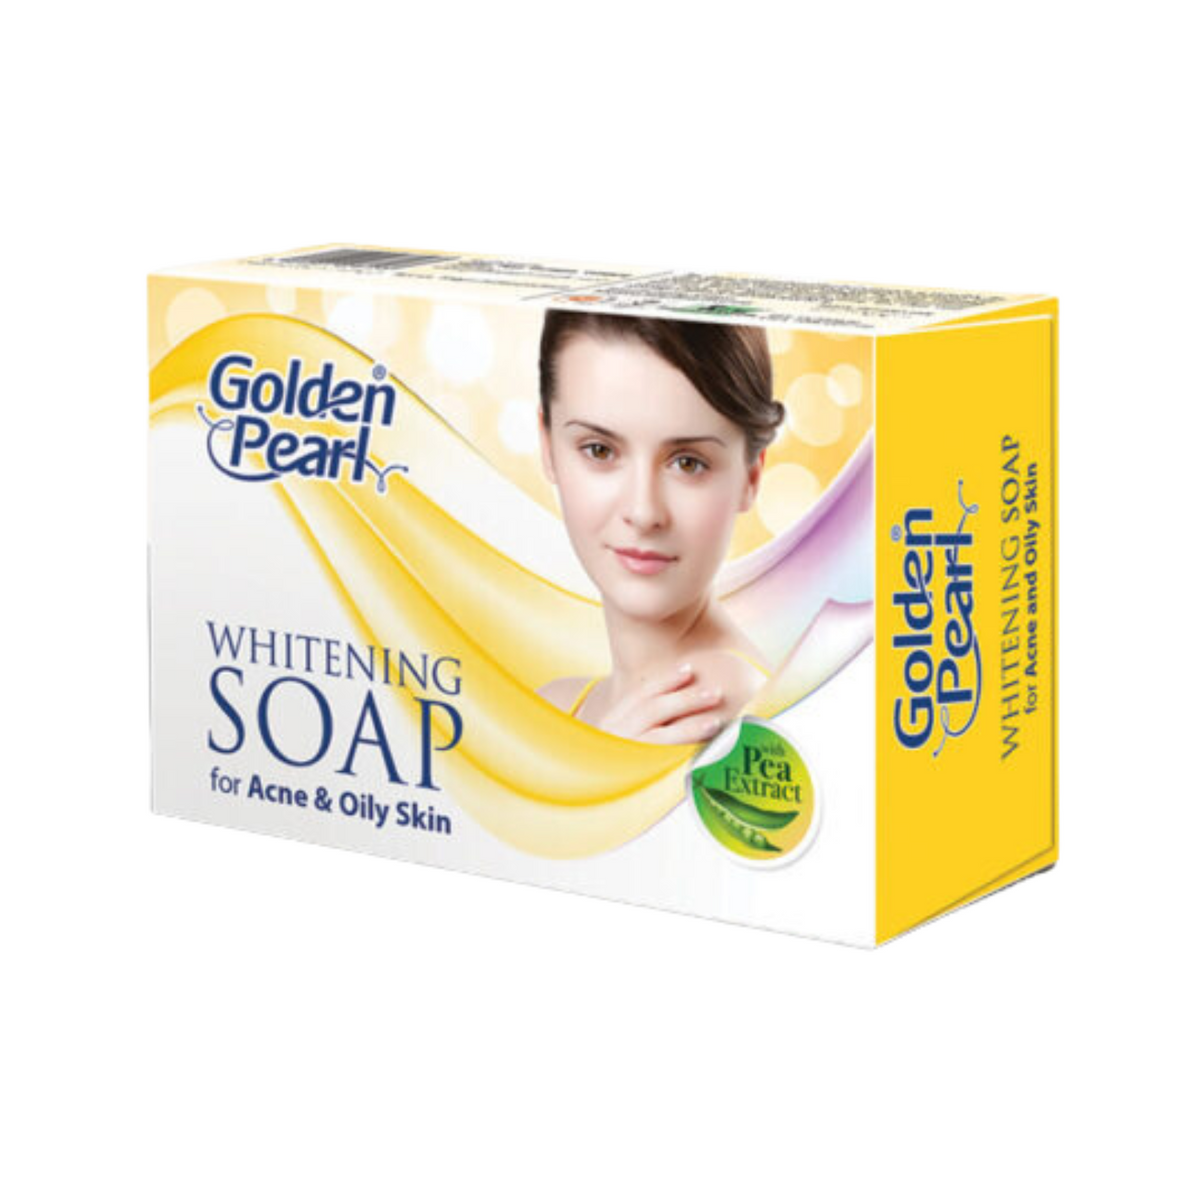 golden-peral-whitening-soap-for-acne-prone-oily-skin-100g